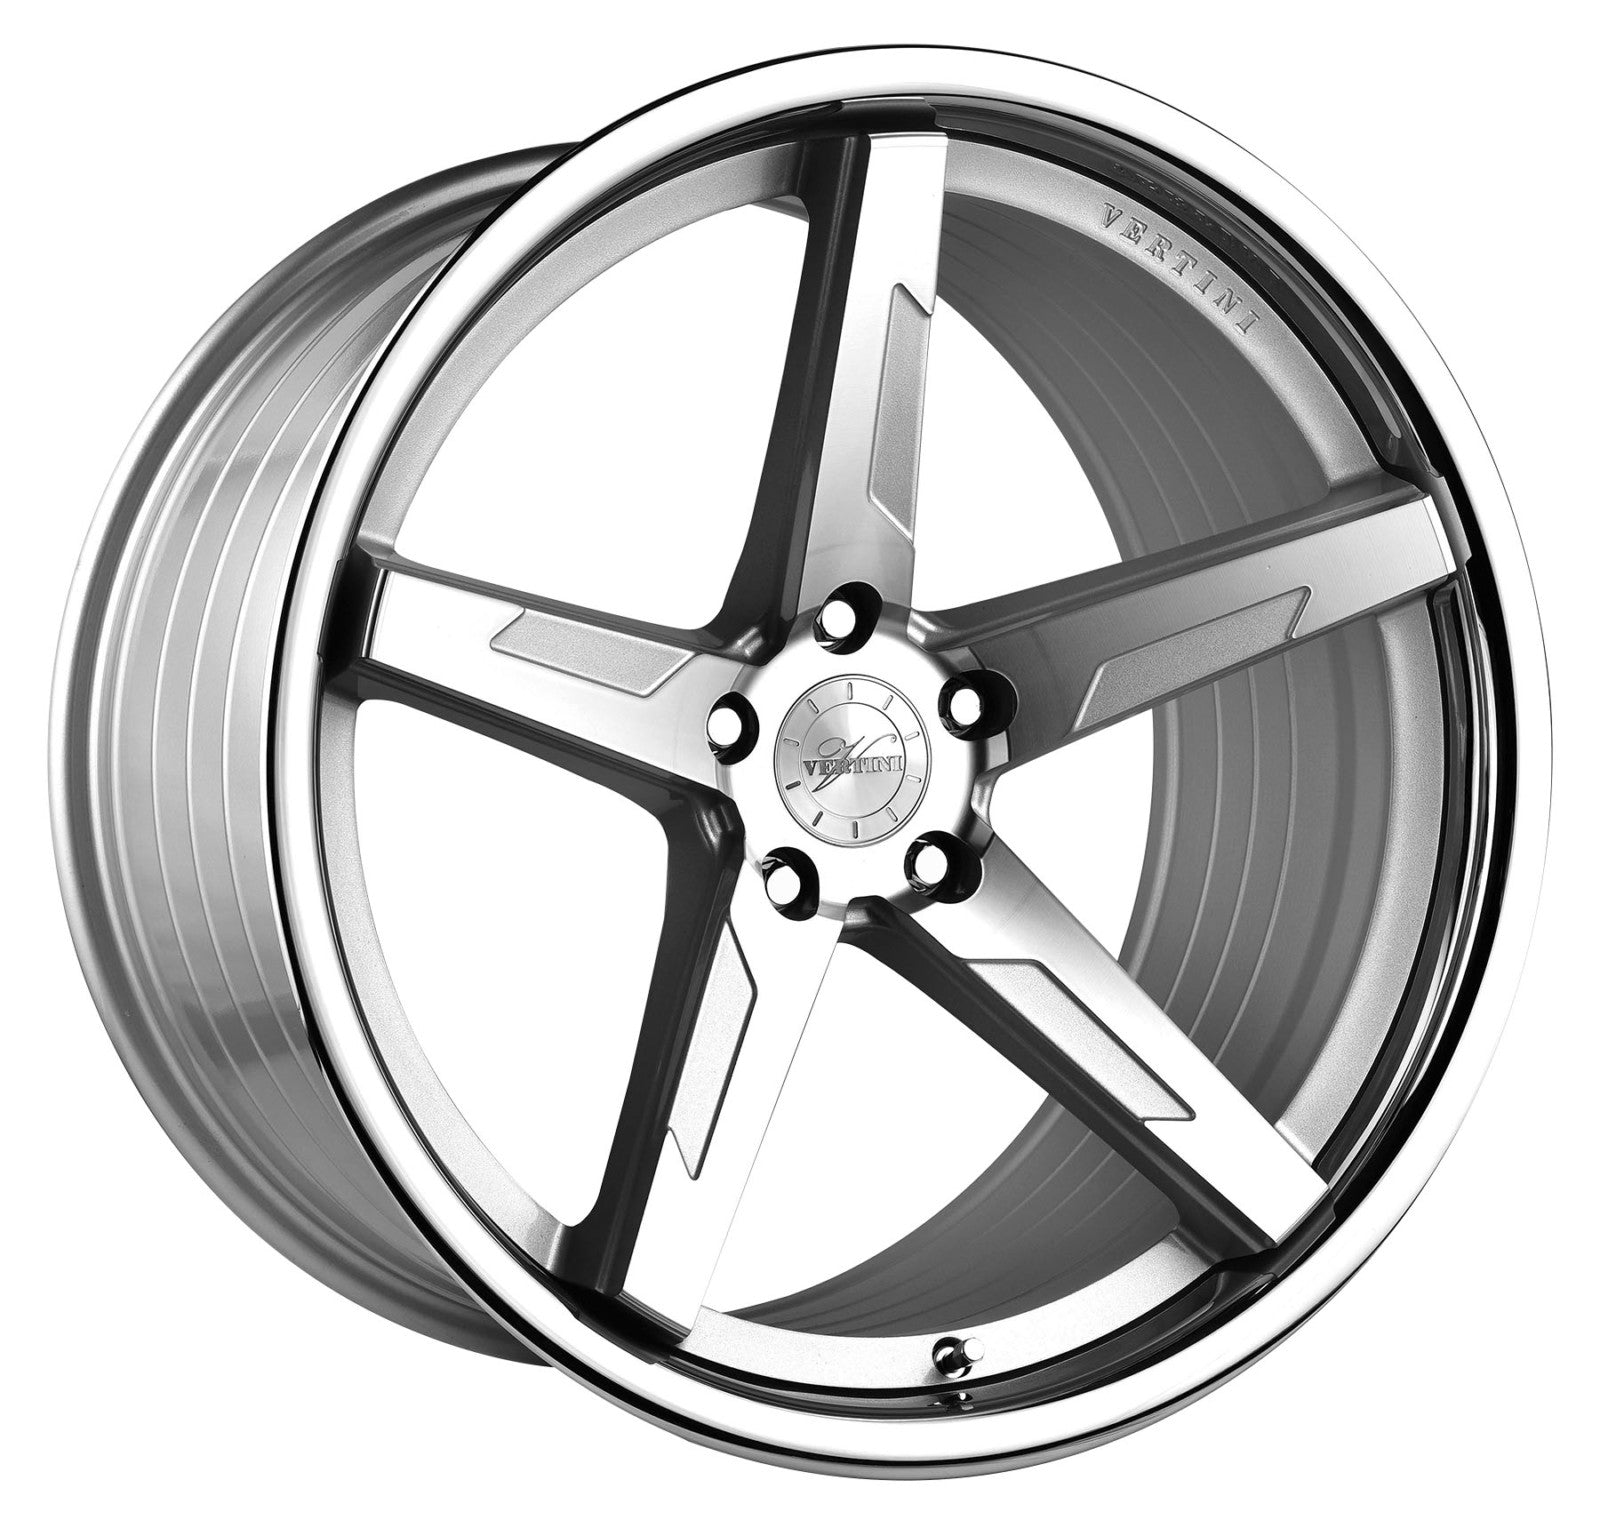 20” Vertini RFS1.7 Machined Silver Wheels - Set of 4 - Motorsports LA